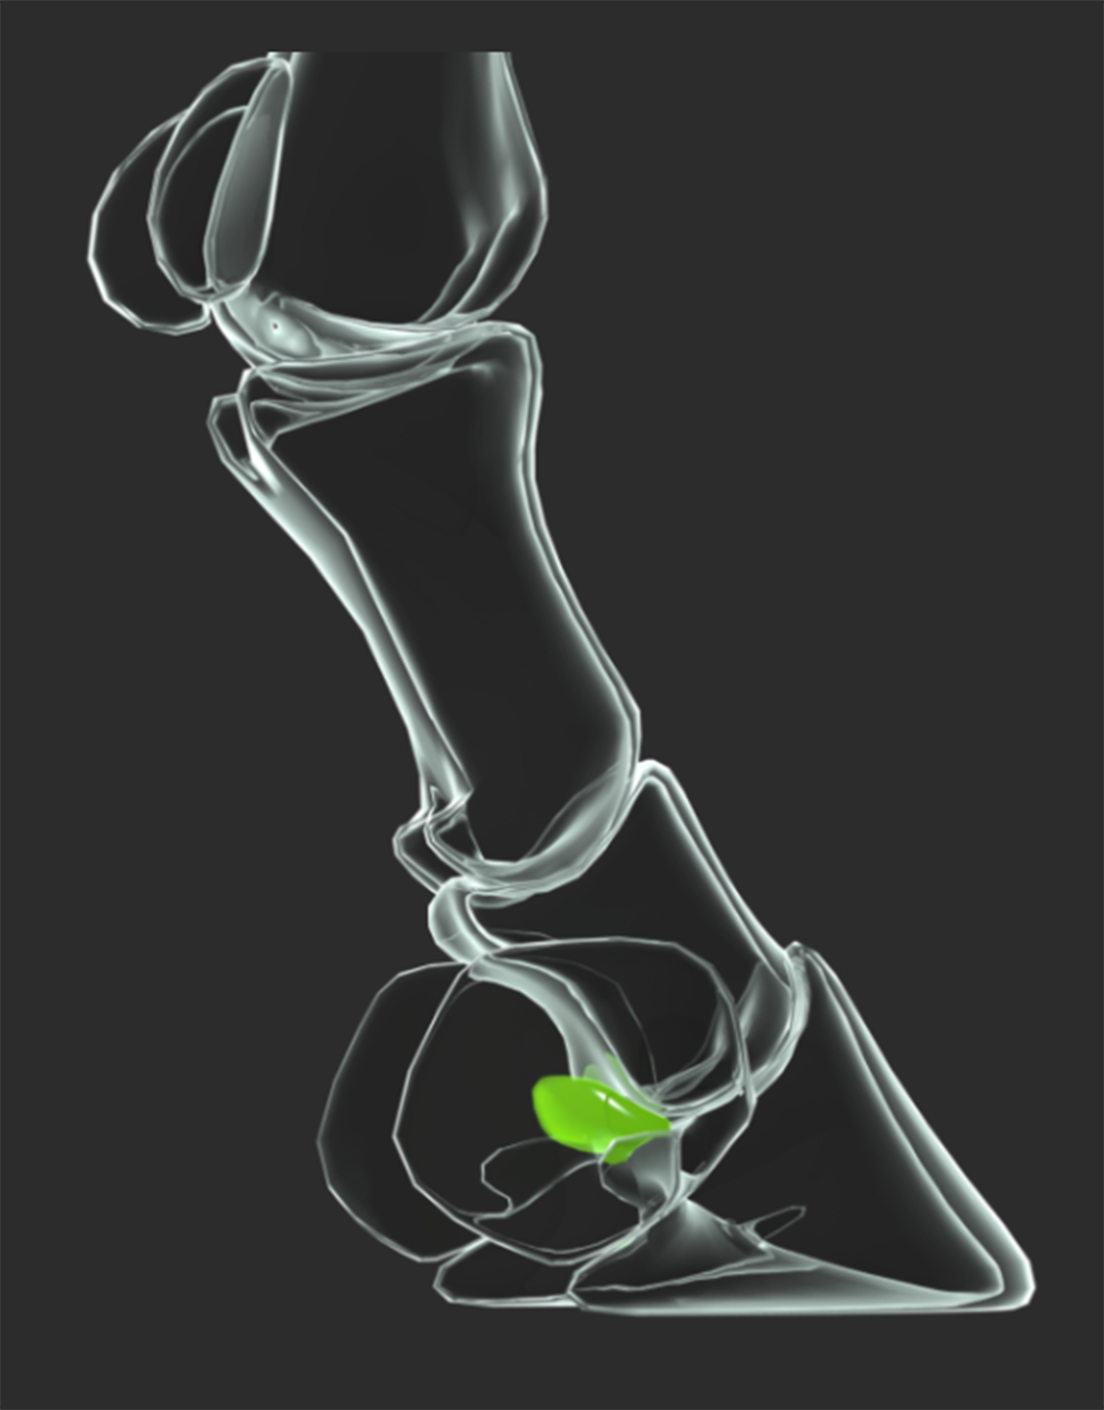 The navicular bone